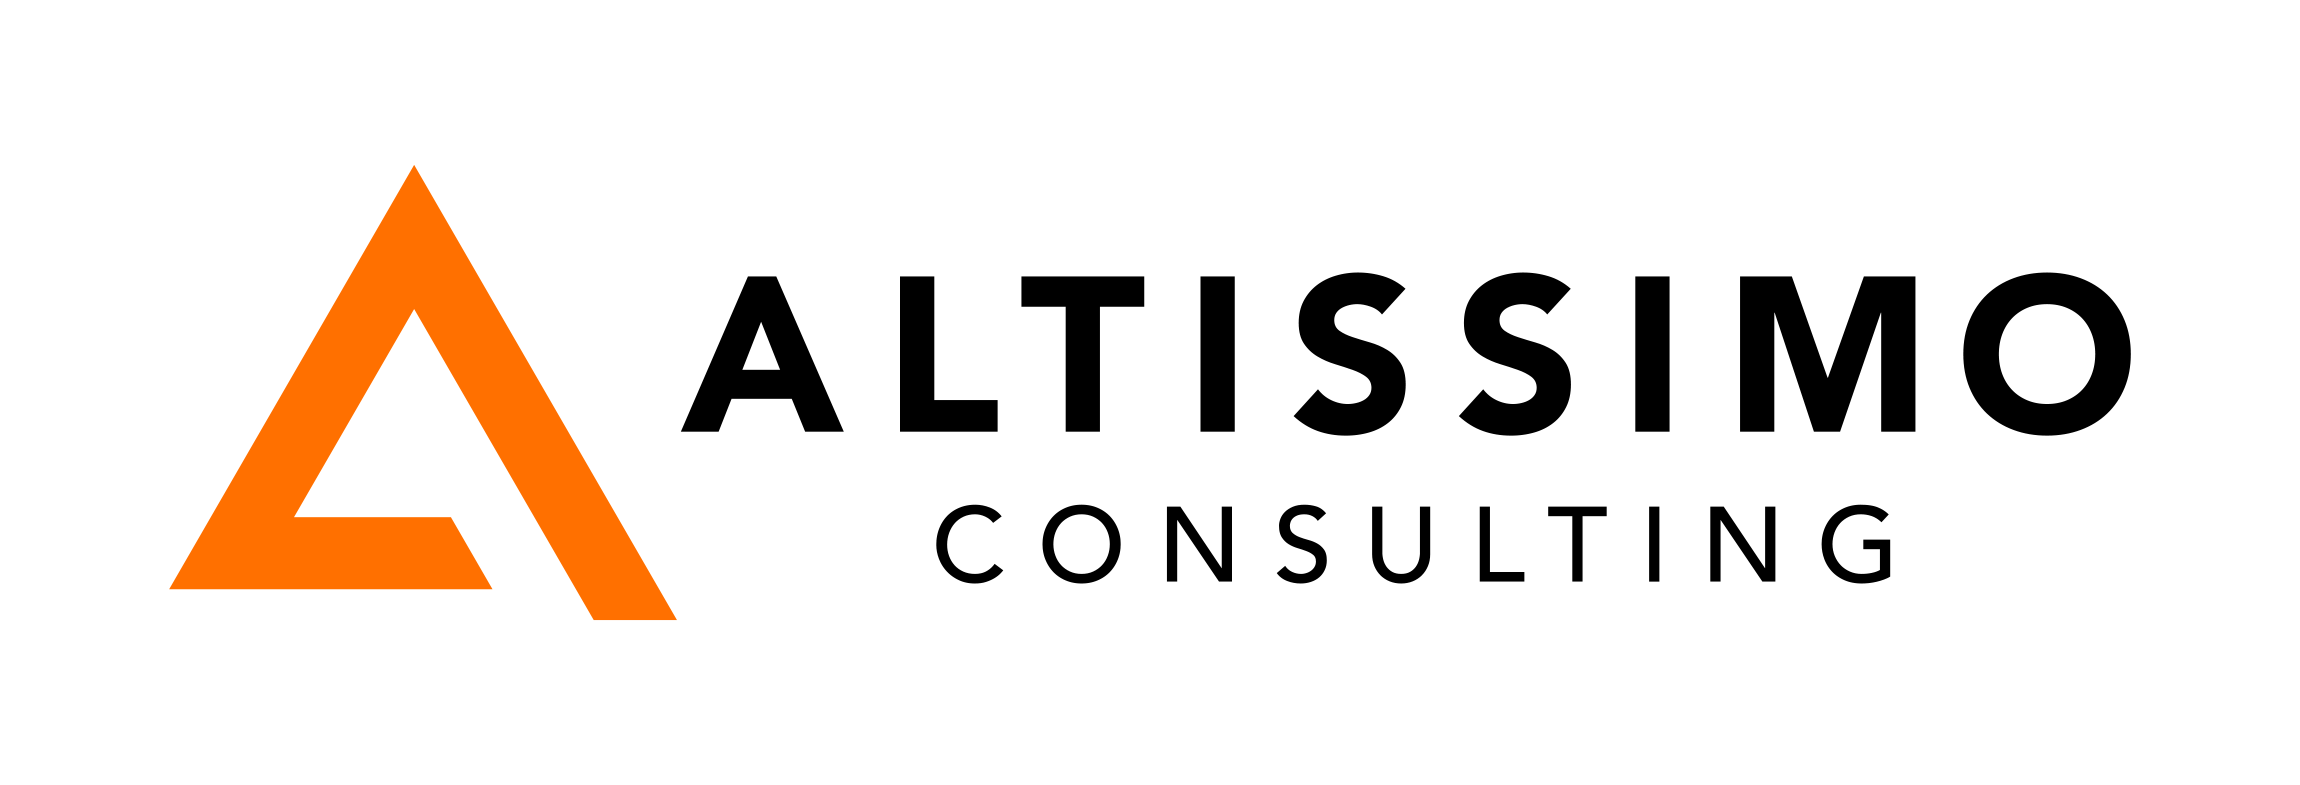 Altissimo Consulting Logo